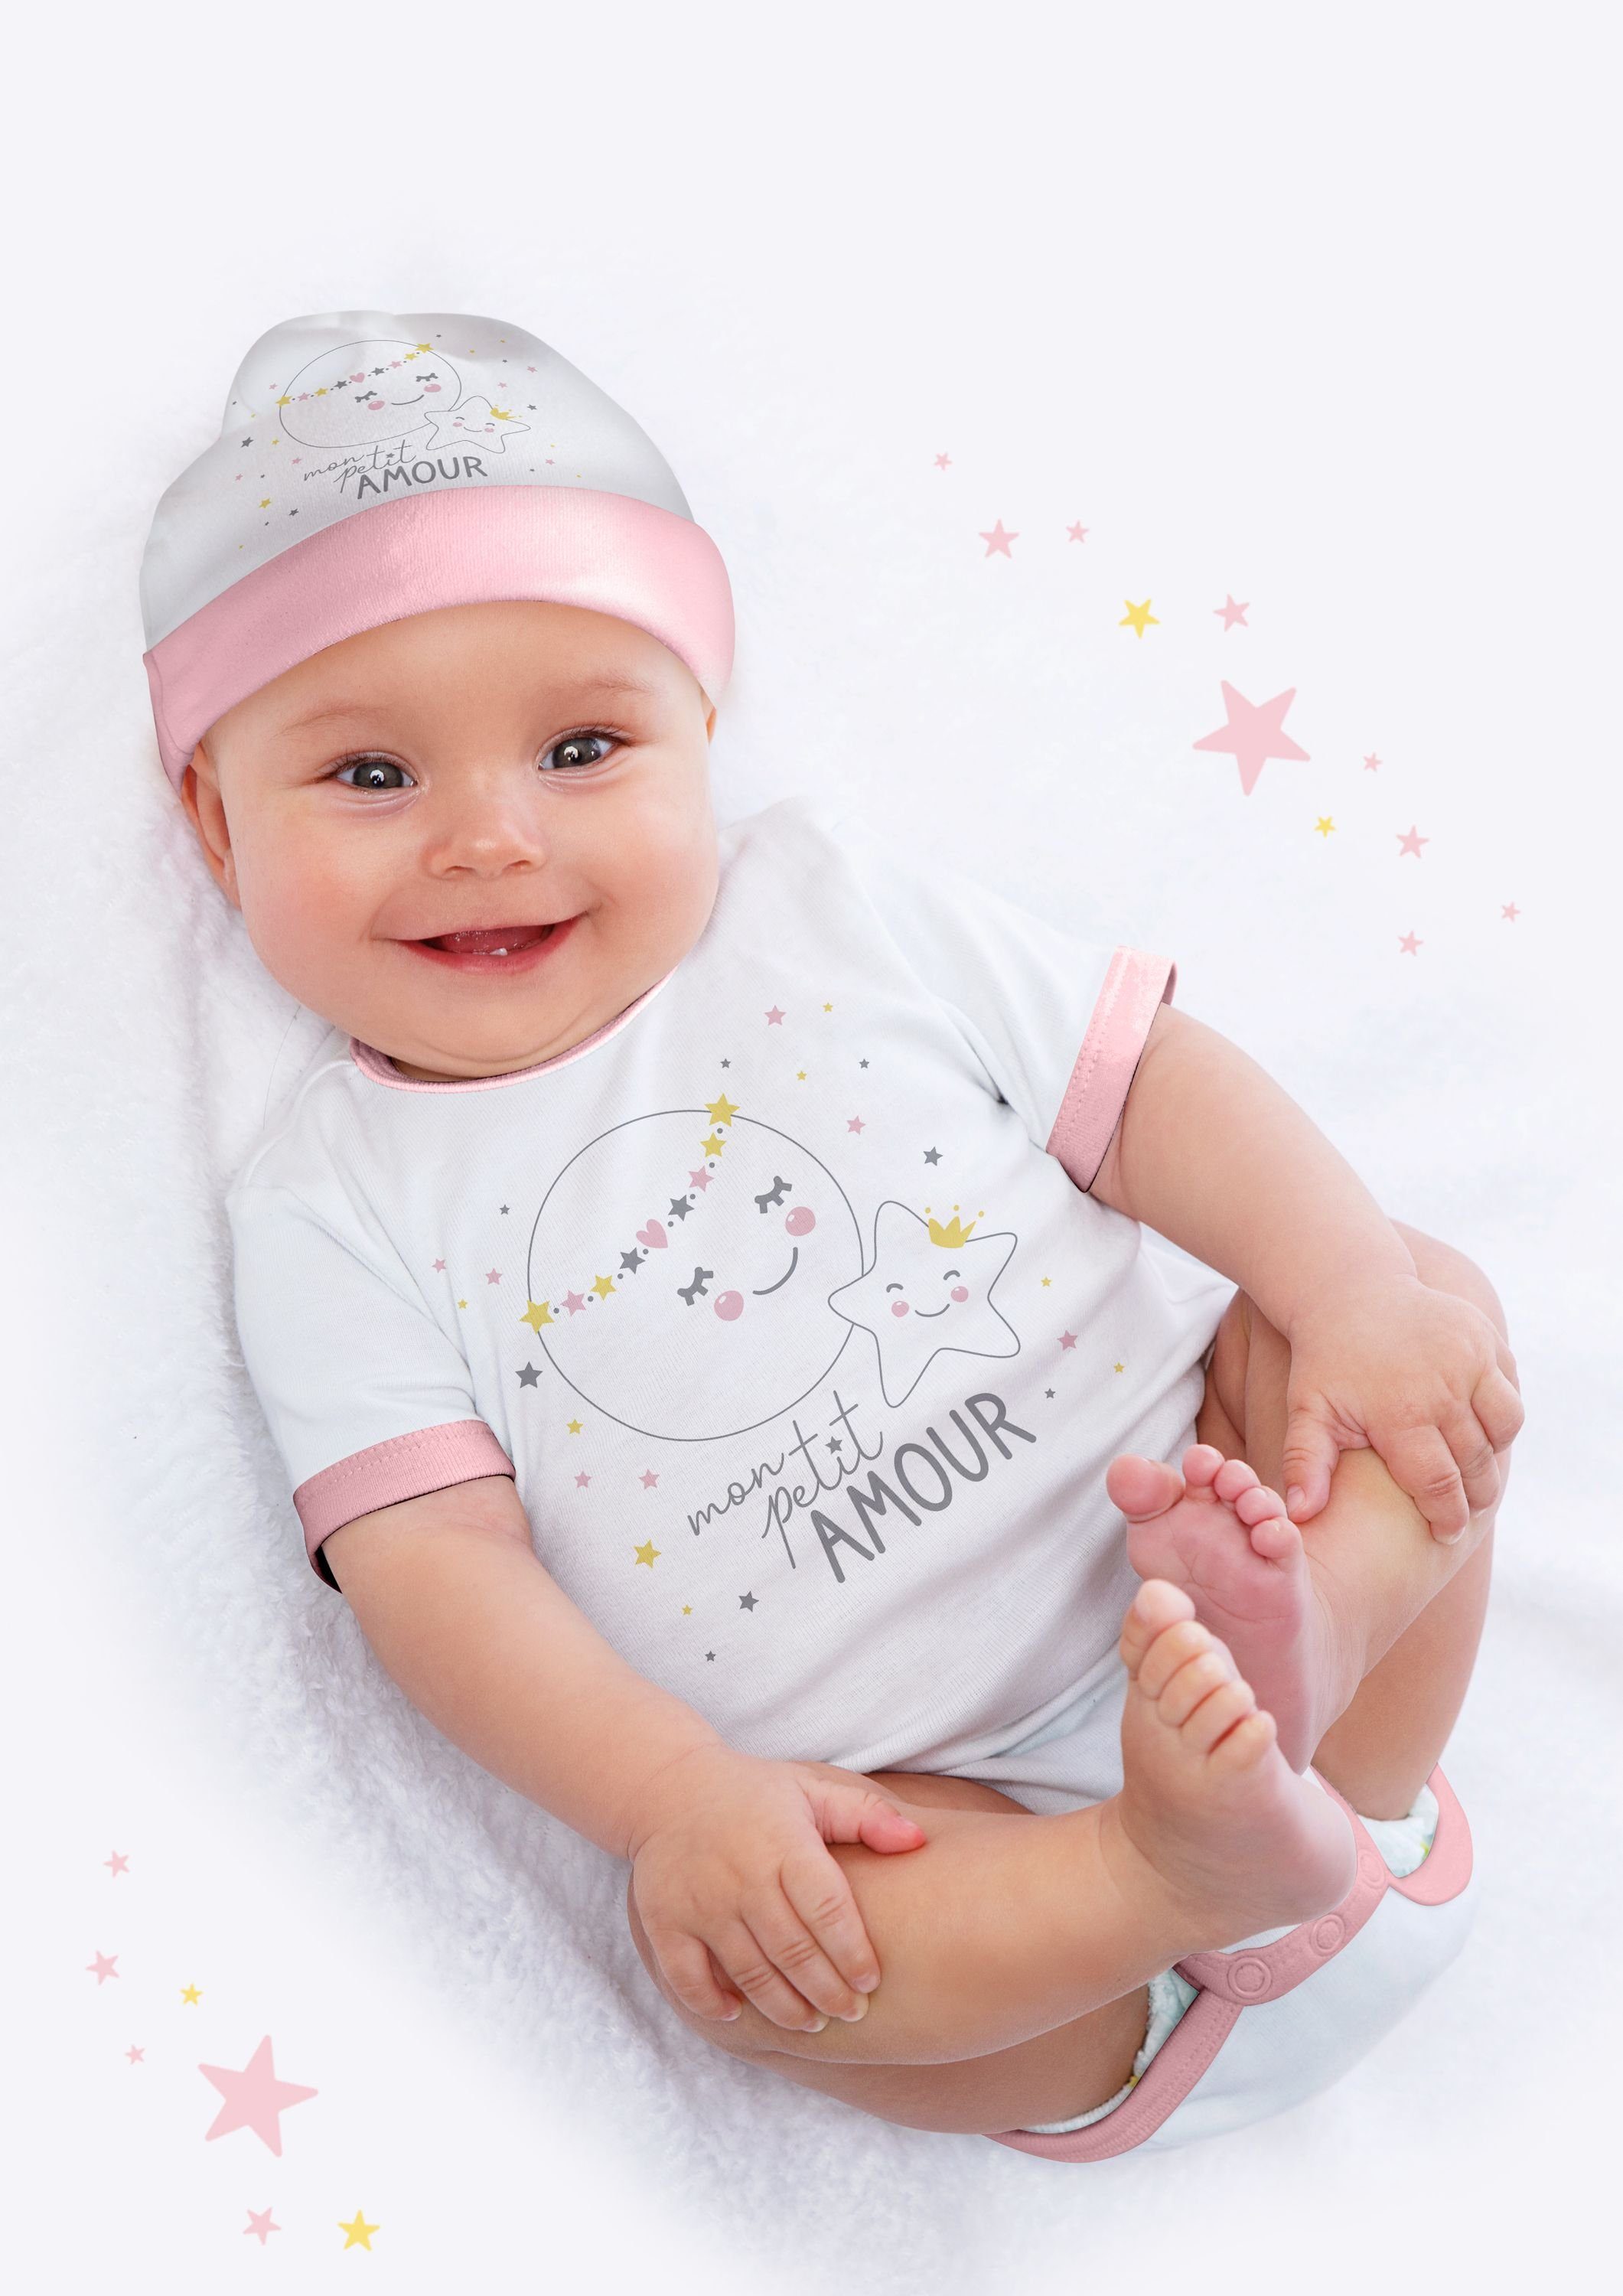 dynamic24 Neugeborenen-Geschenkset Baby Set Geschenk Sterne Outfit Erstlingsset Erstausstattung tlg. 3